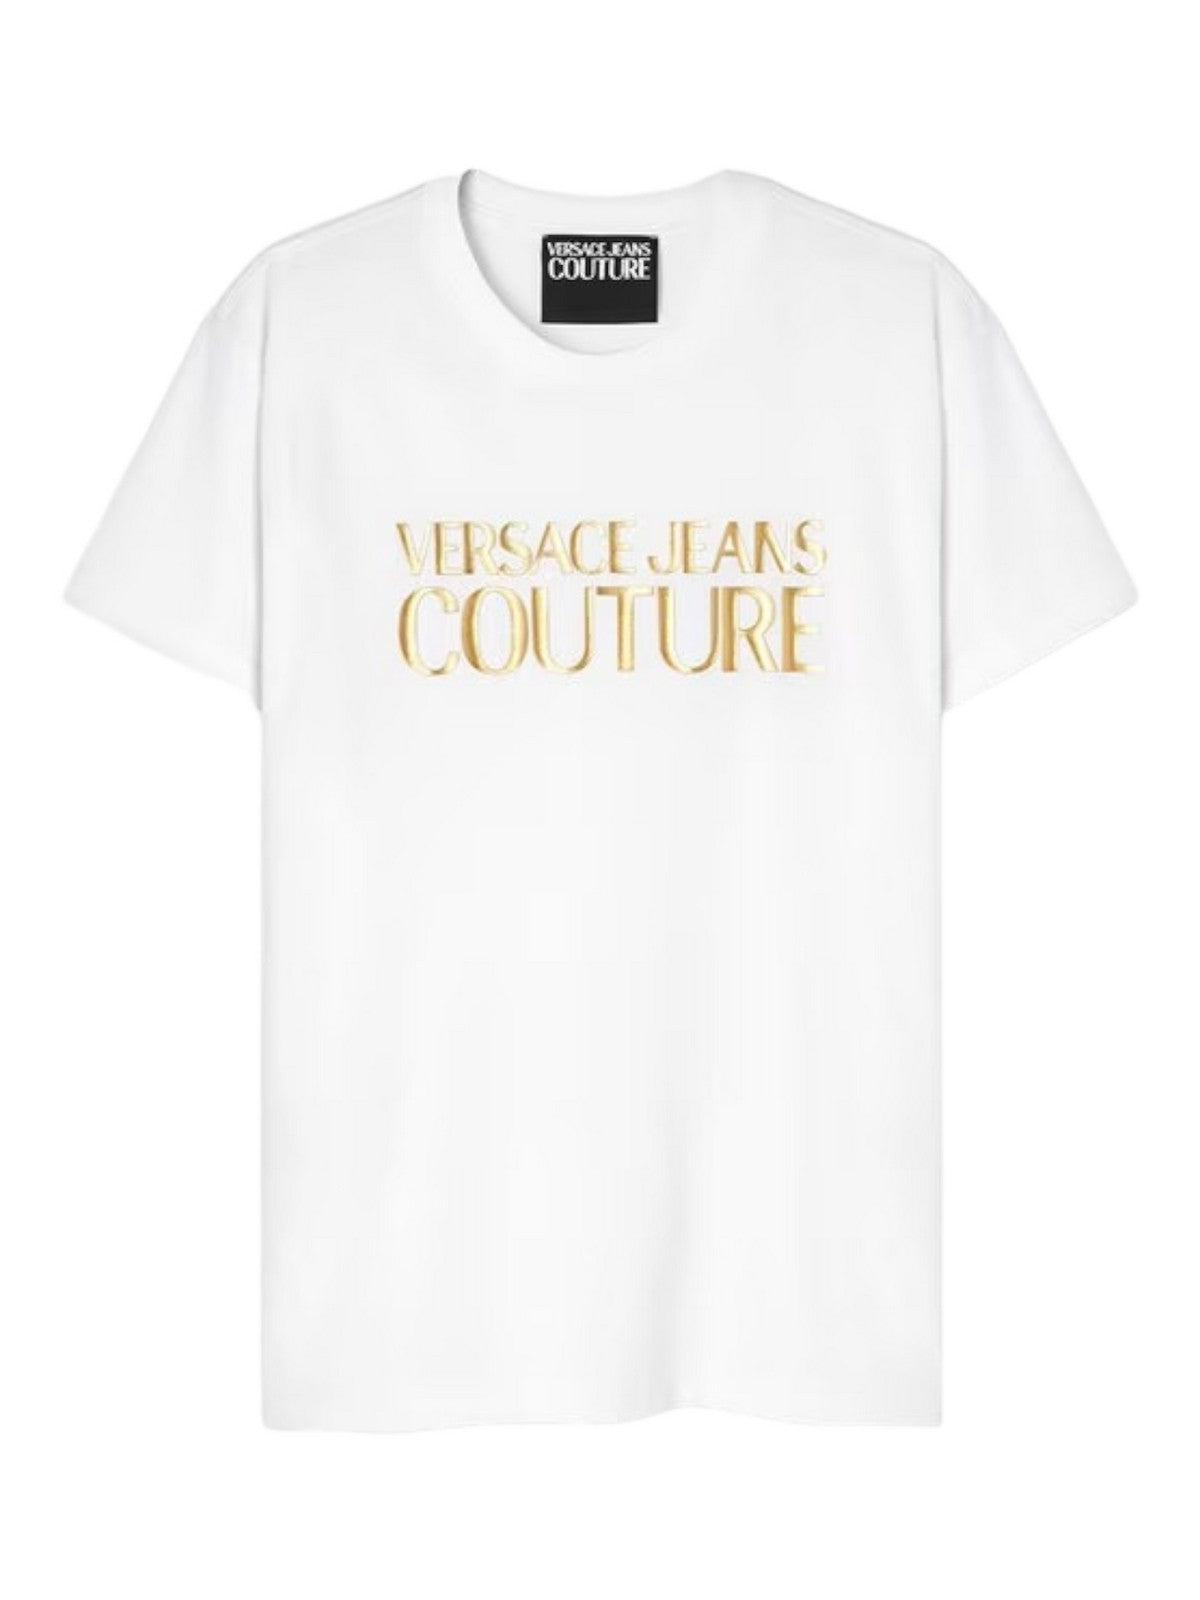 VERSACE JEANS COUTURE T-Shirt e Polo Uomo  75GAHT01 CJ00T G03 Bianco